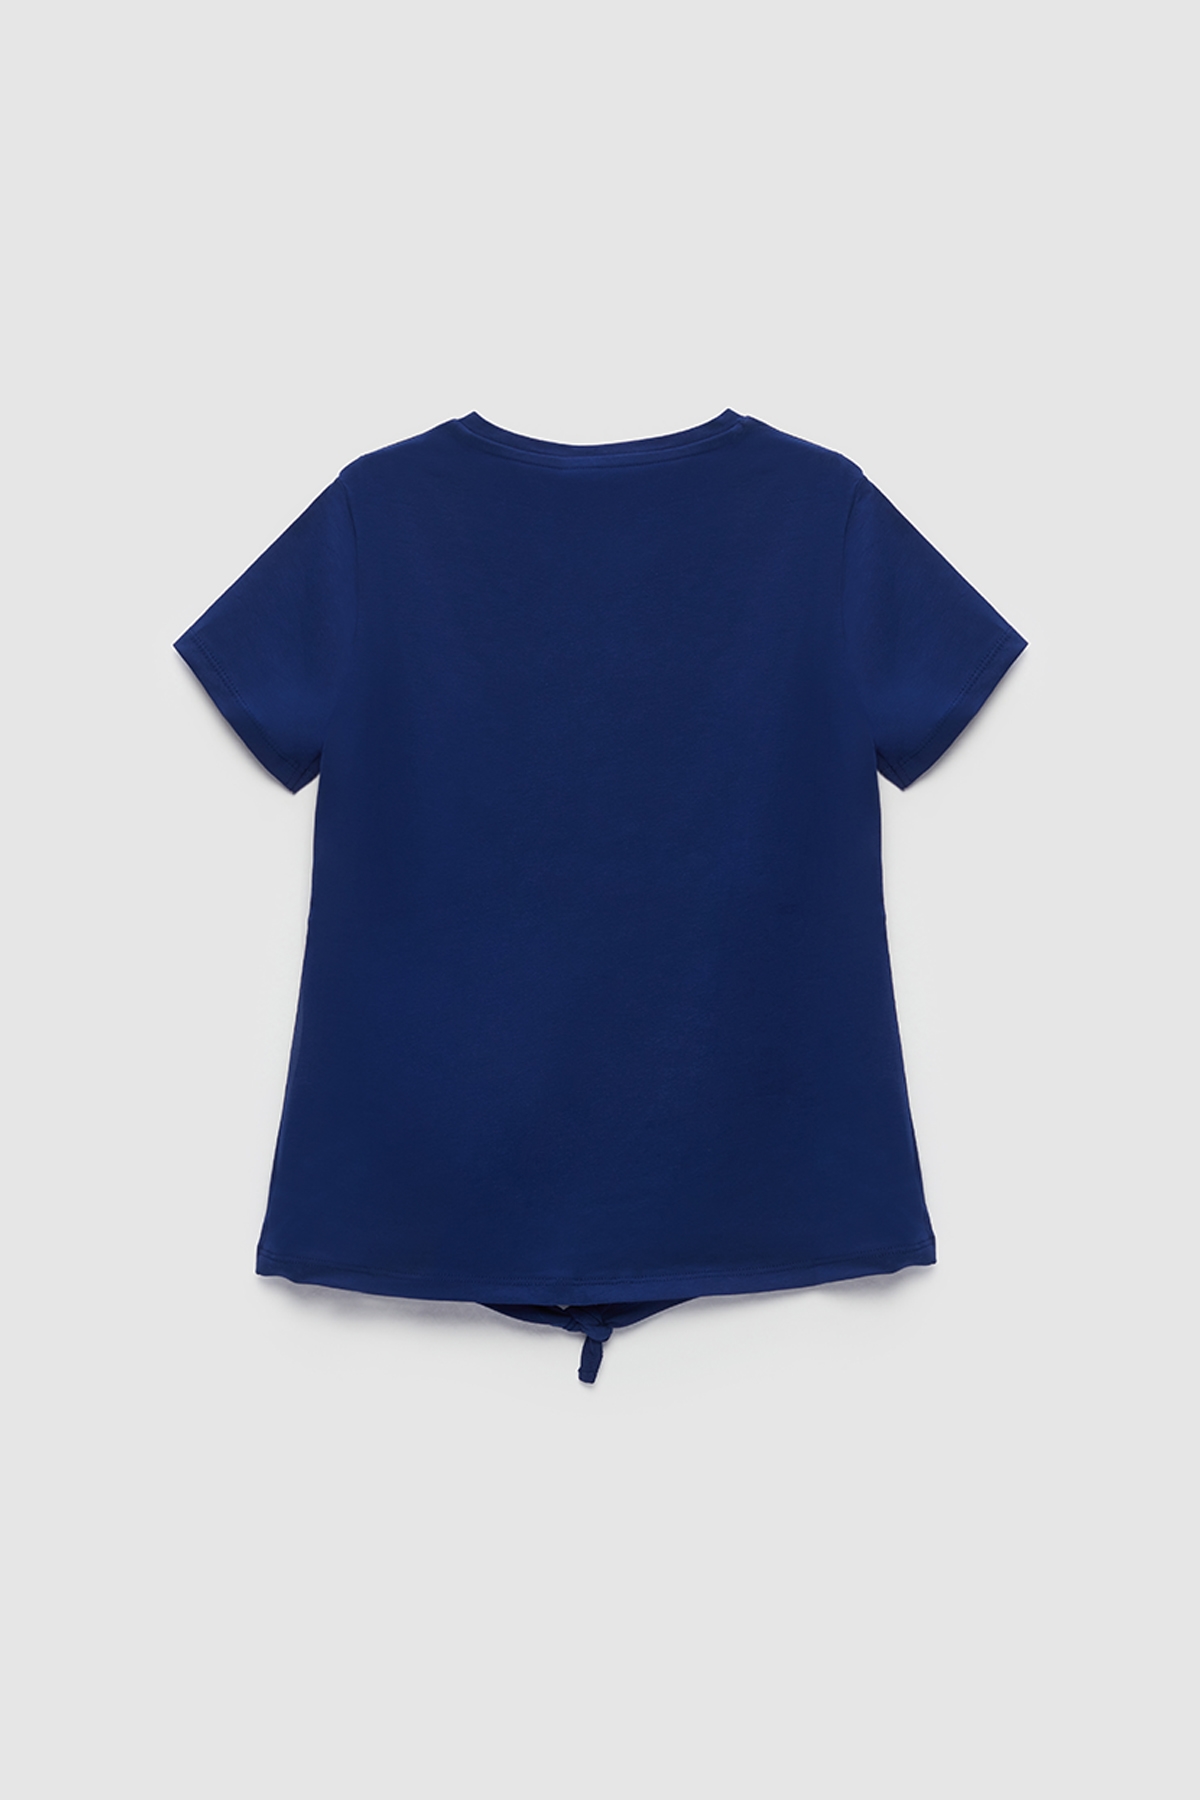 Kız Çocuk Mavi T-Shirt